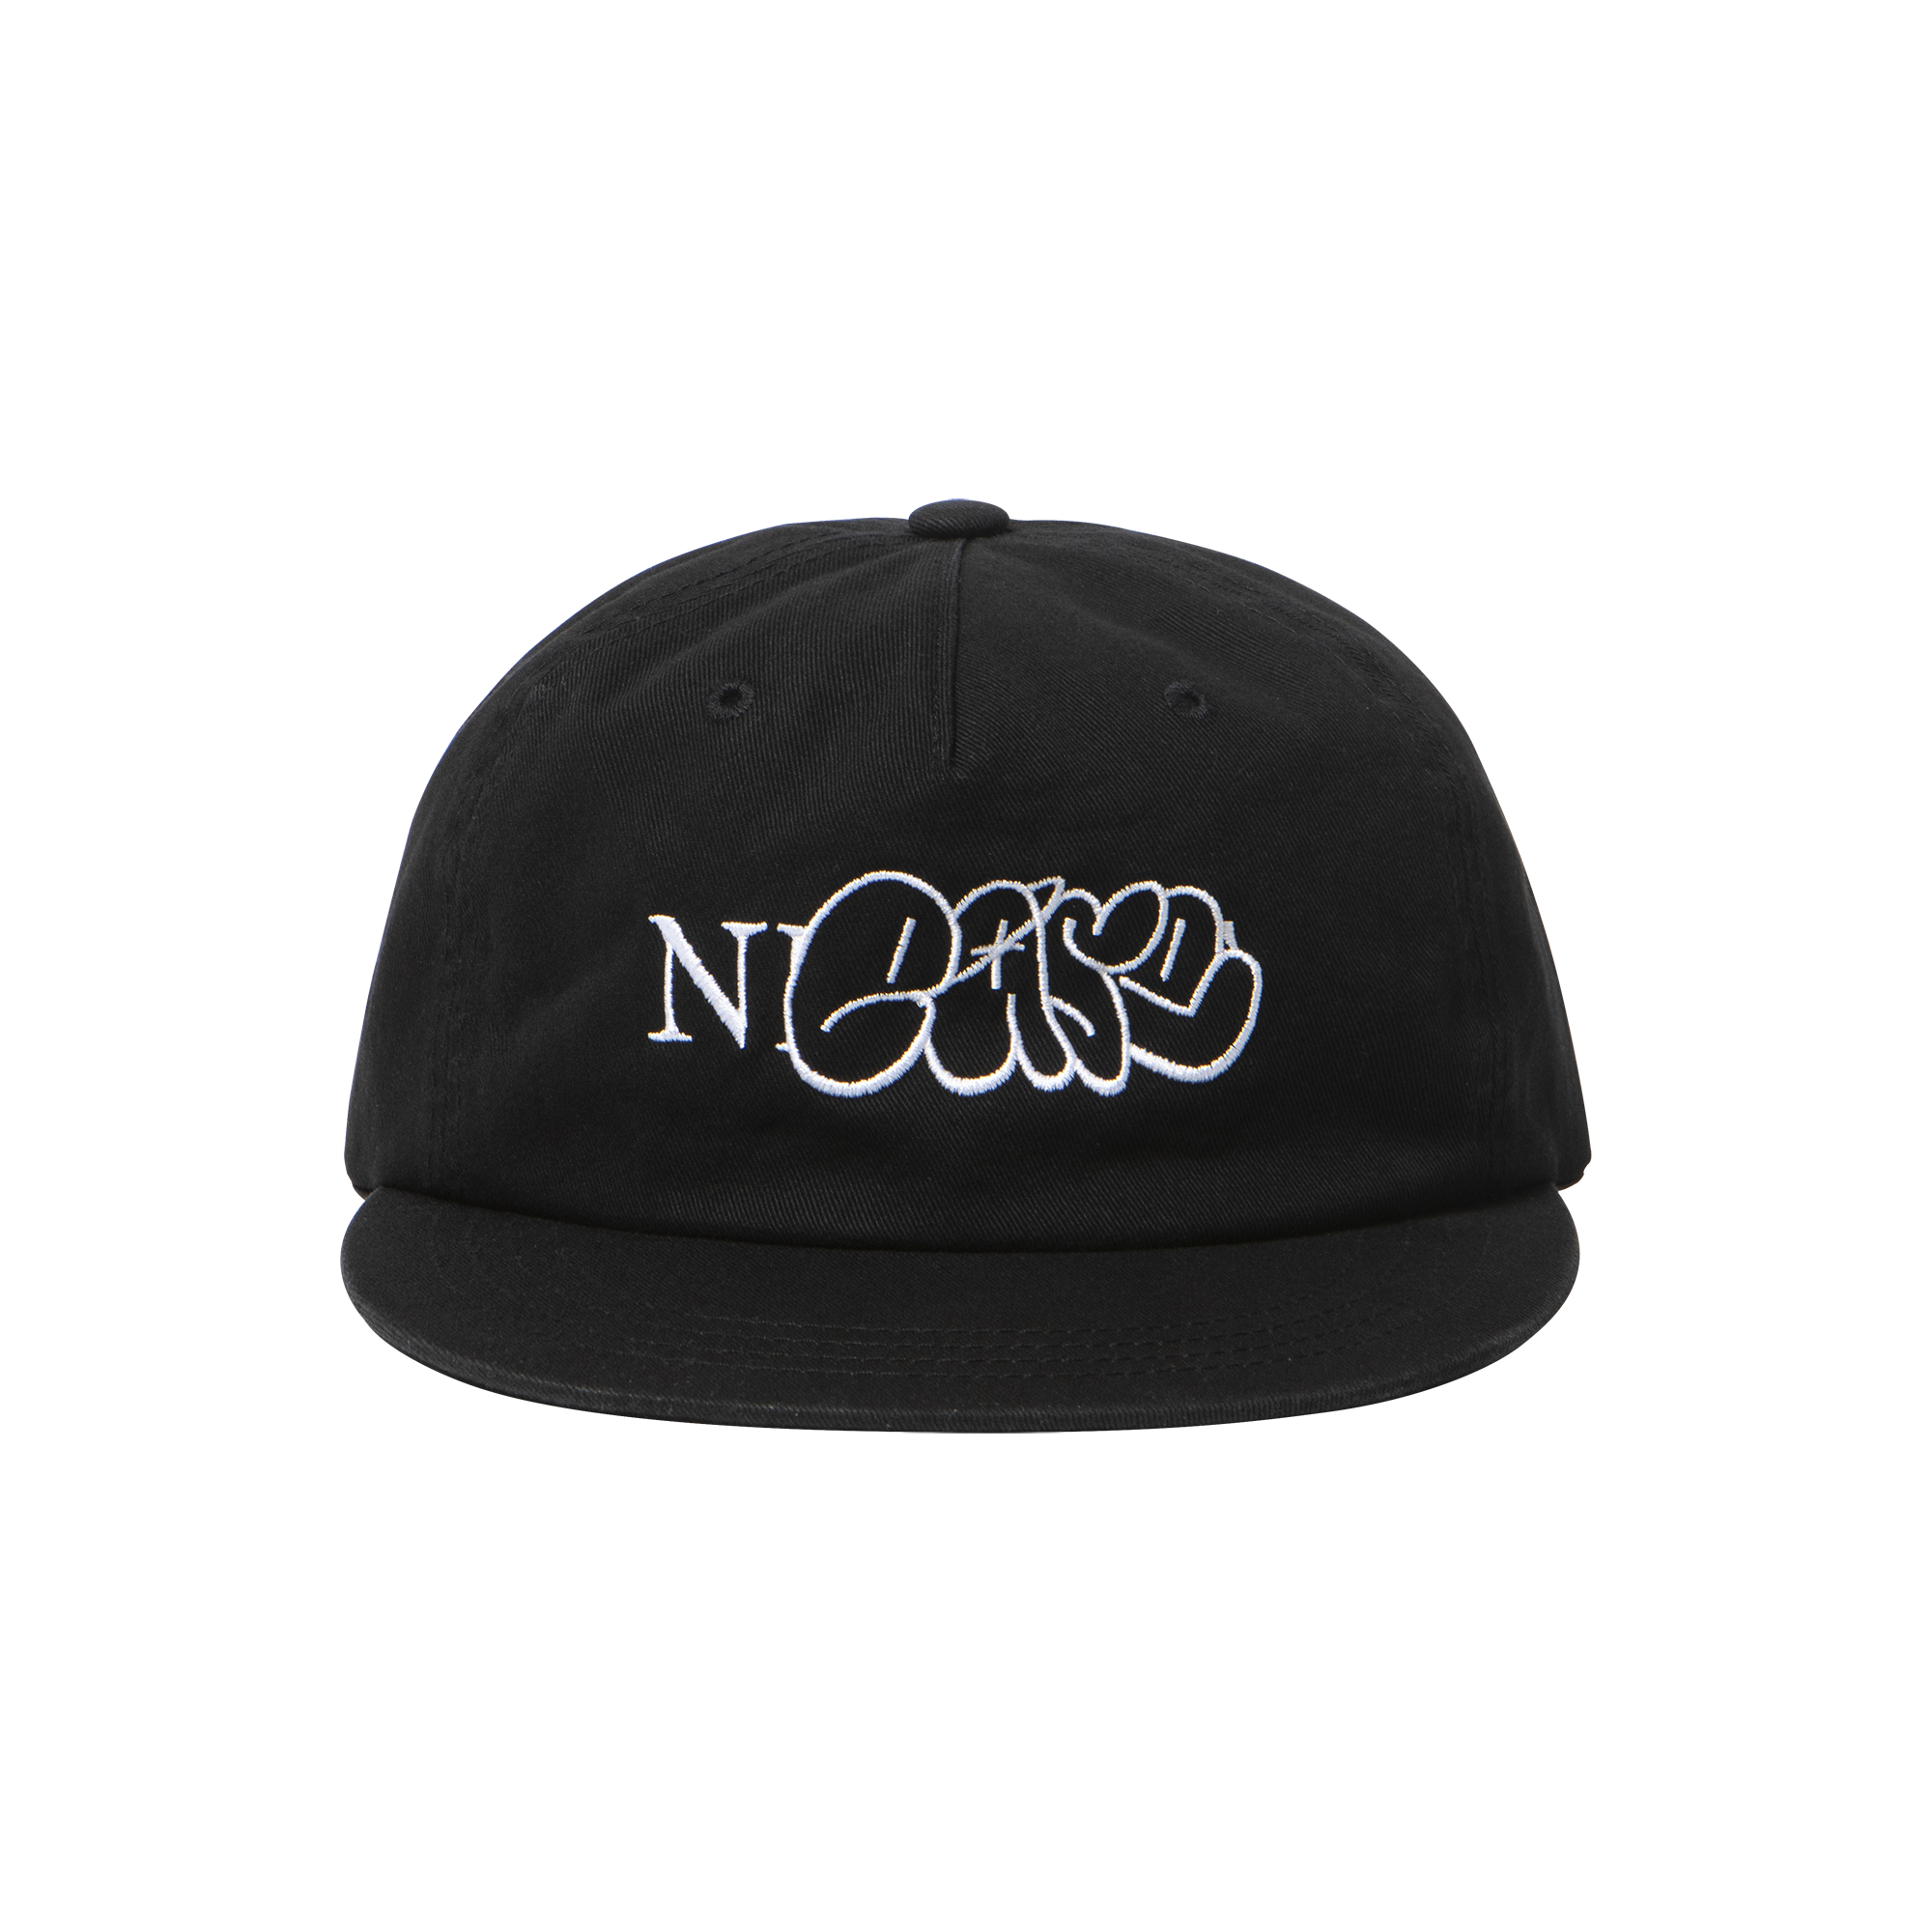 NEASE Bubble graffiti logo hat (black)